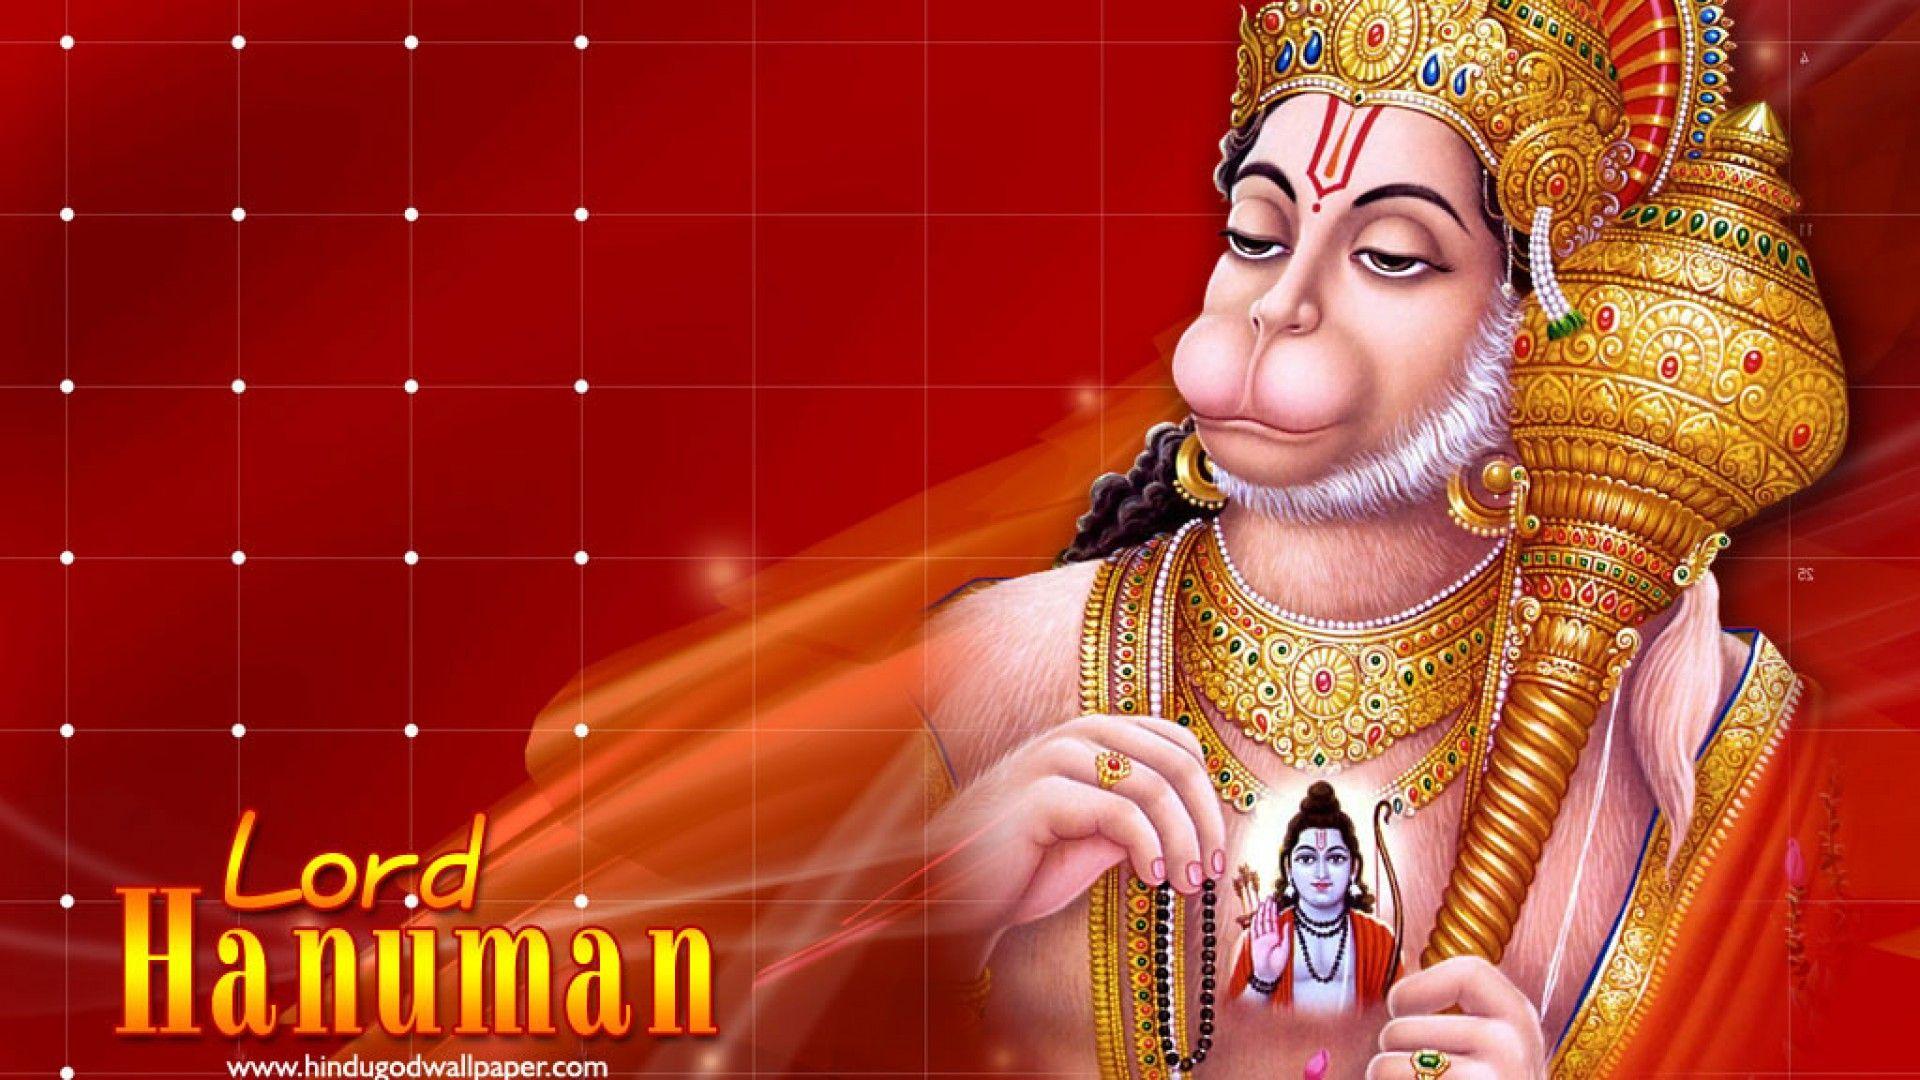 Hanuman HD Wallpaper 1920x1080 (Picture)